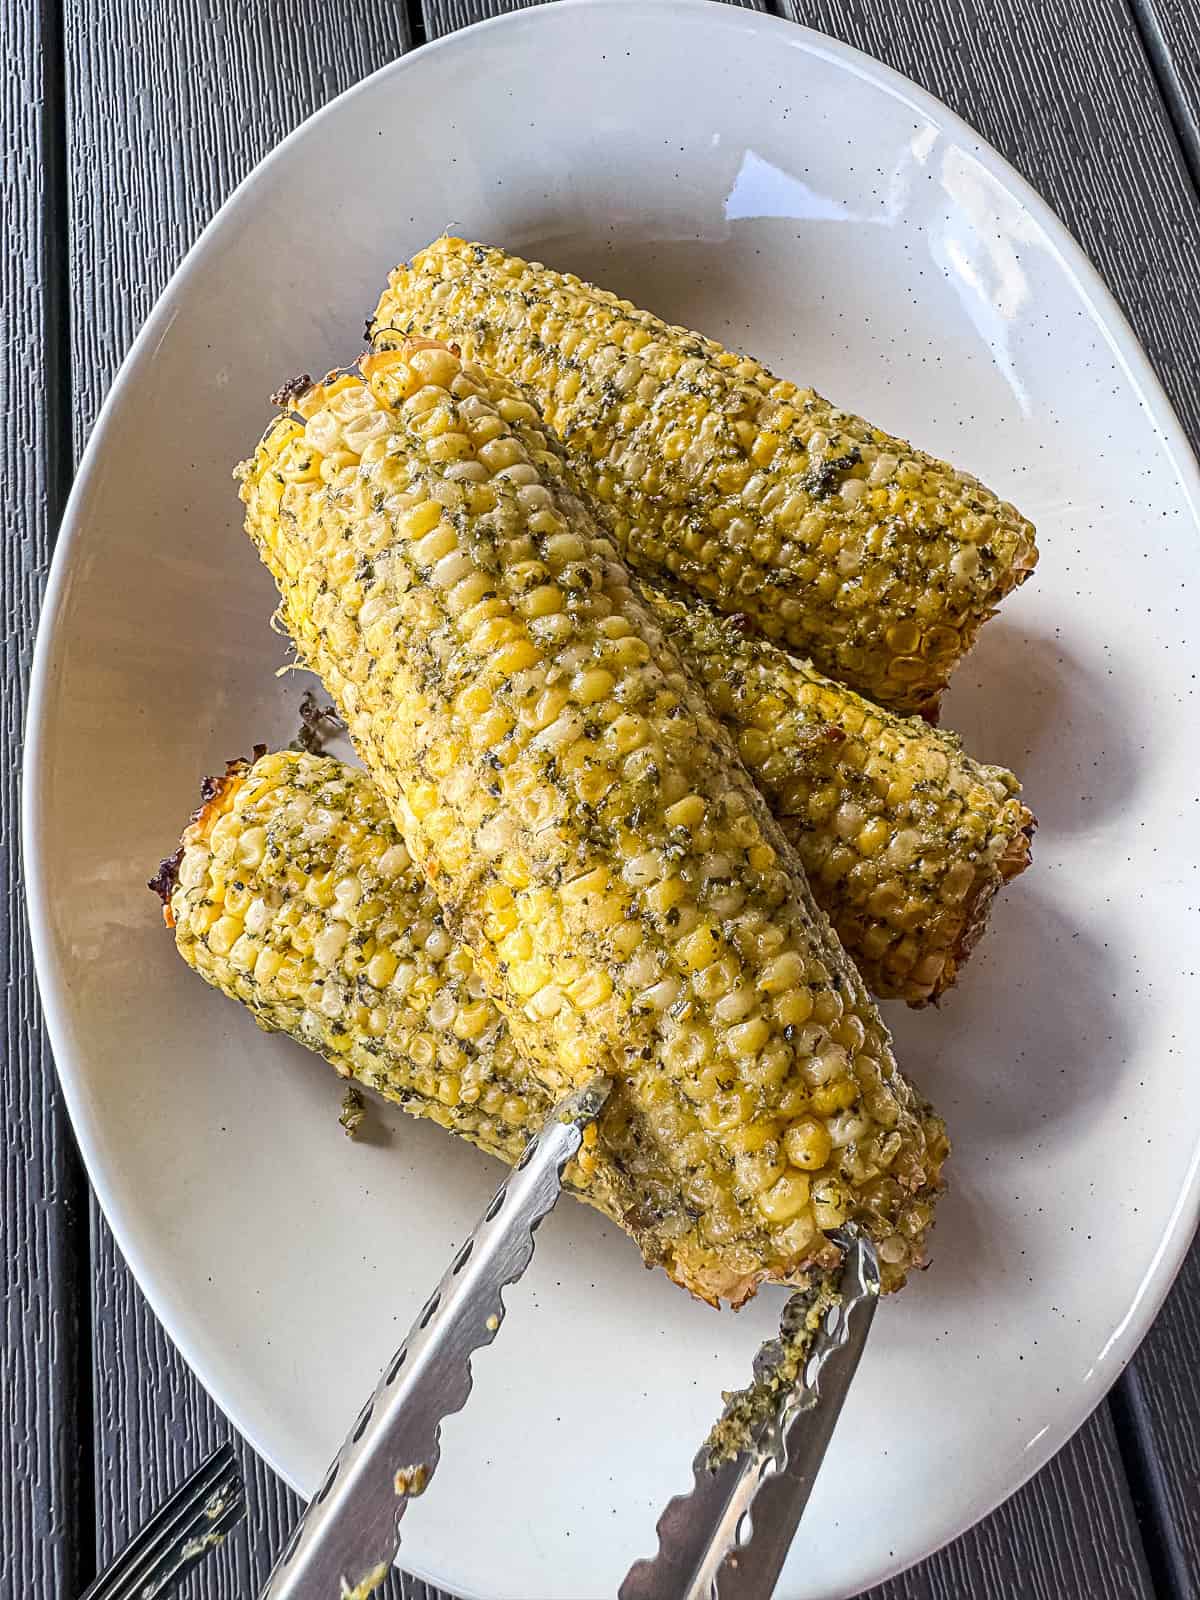 Corn on the Cob Smoked With Pesto On Serving Dish